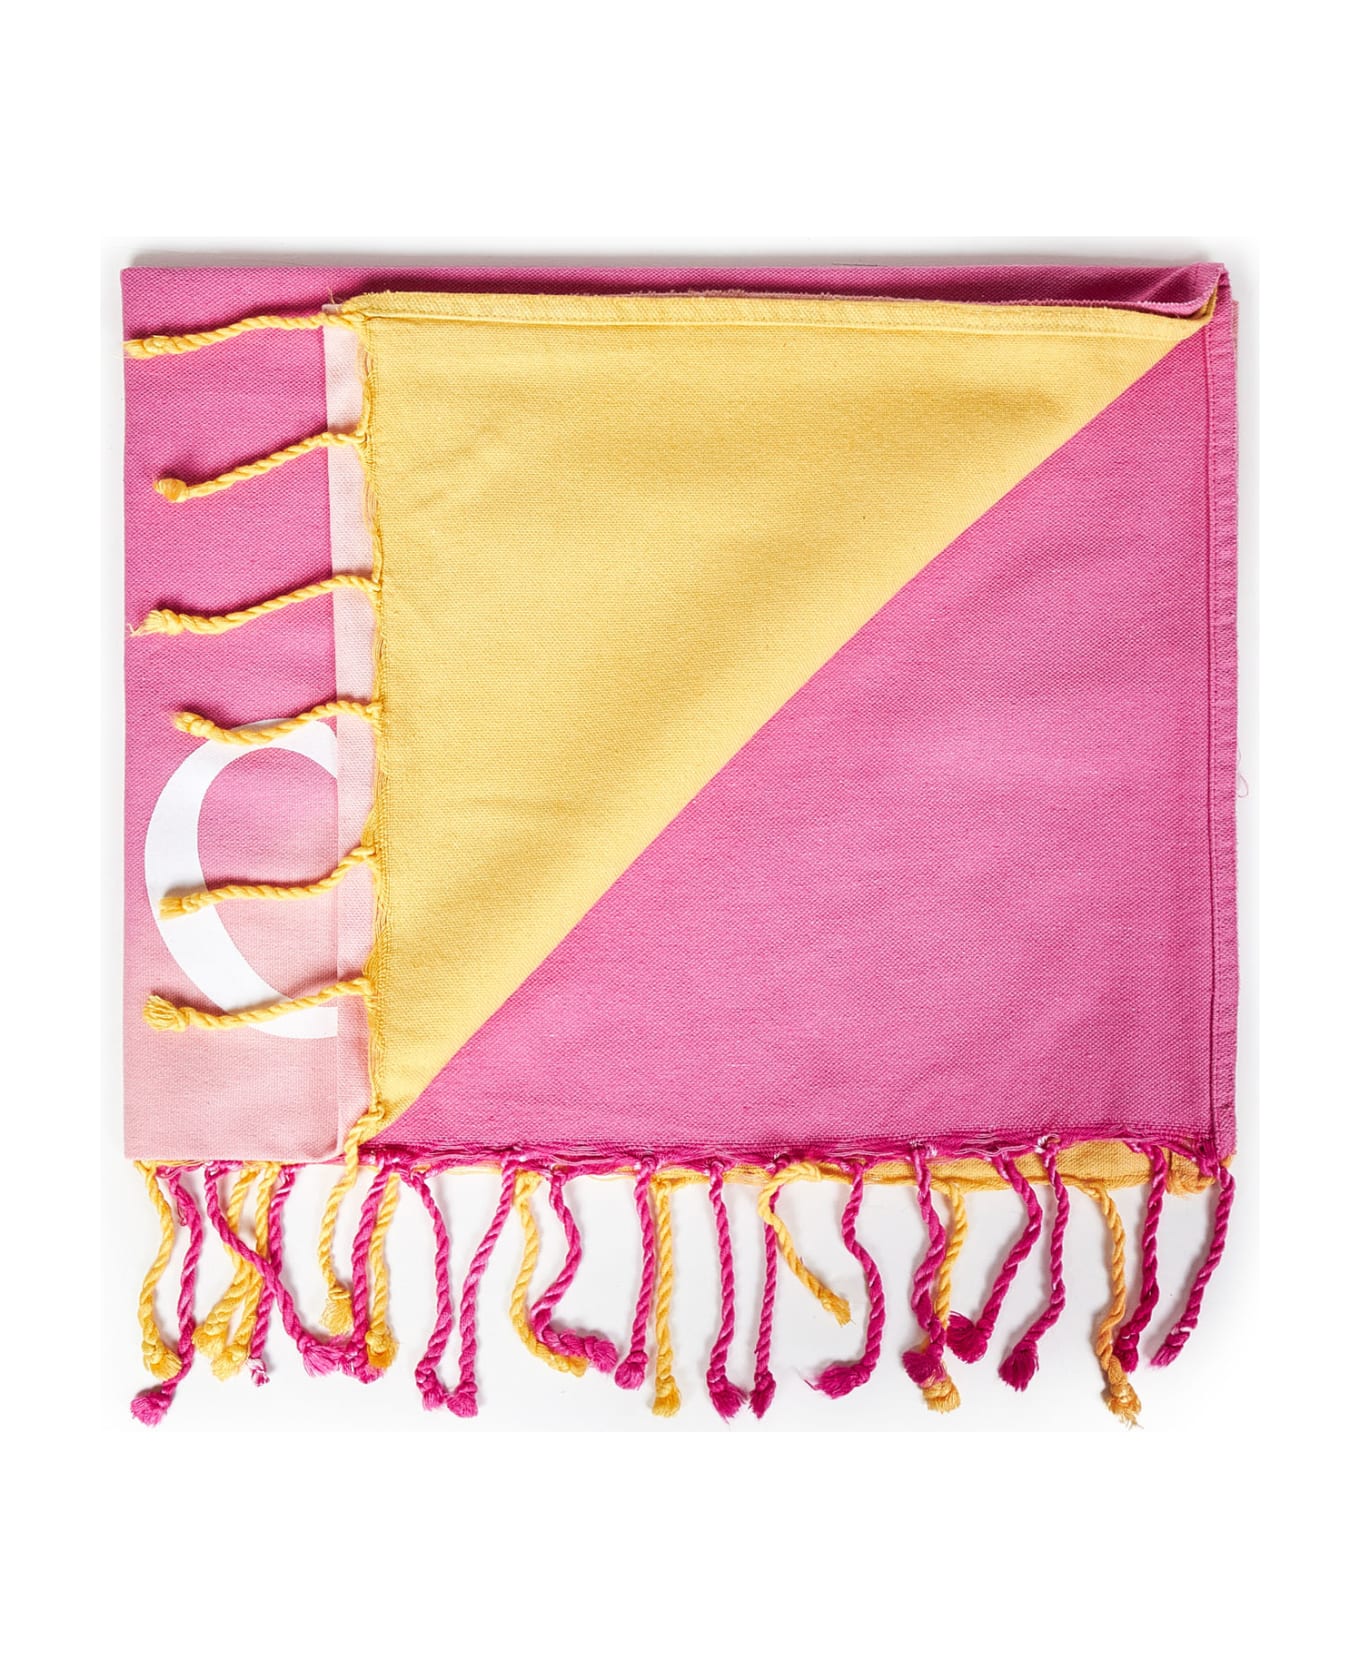 Chloé Kids Towel - Pink 水着